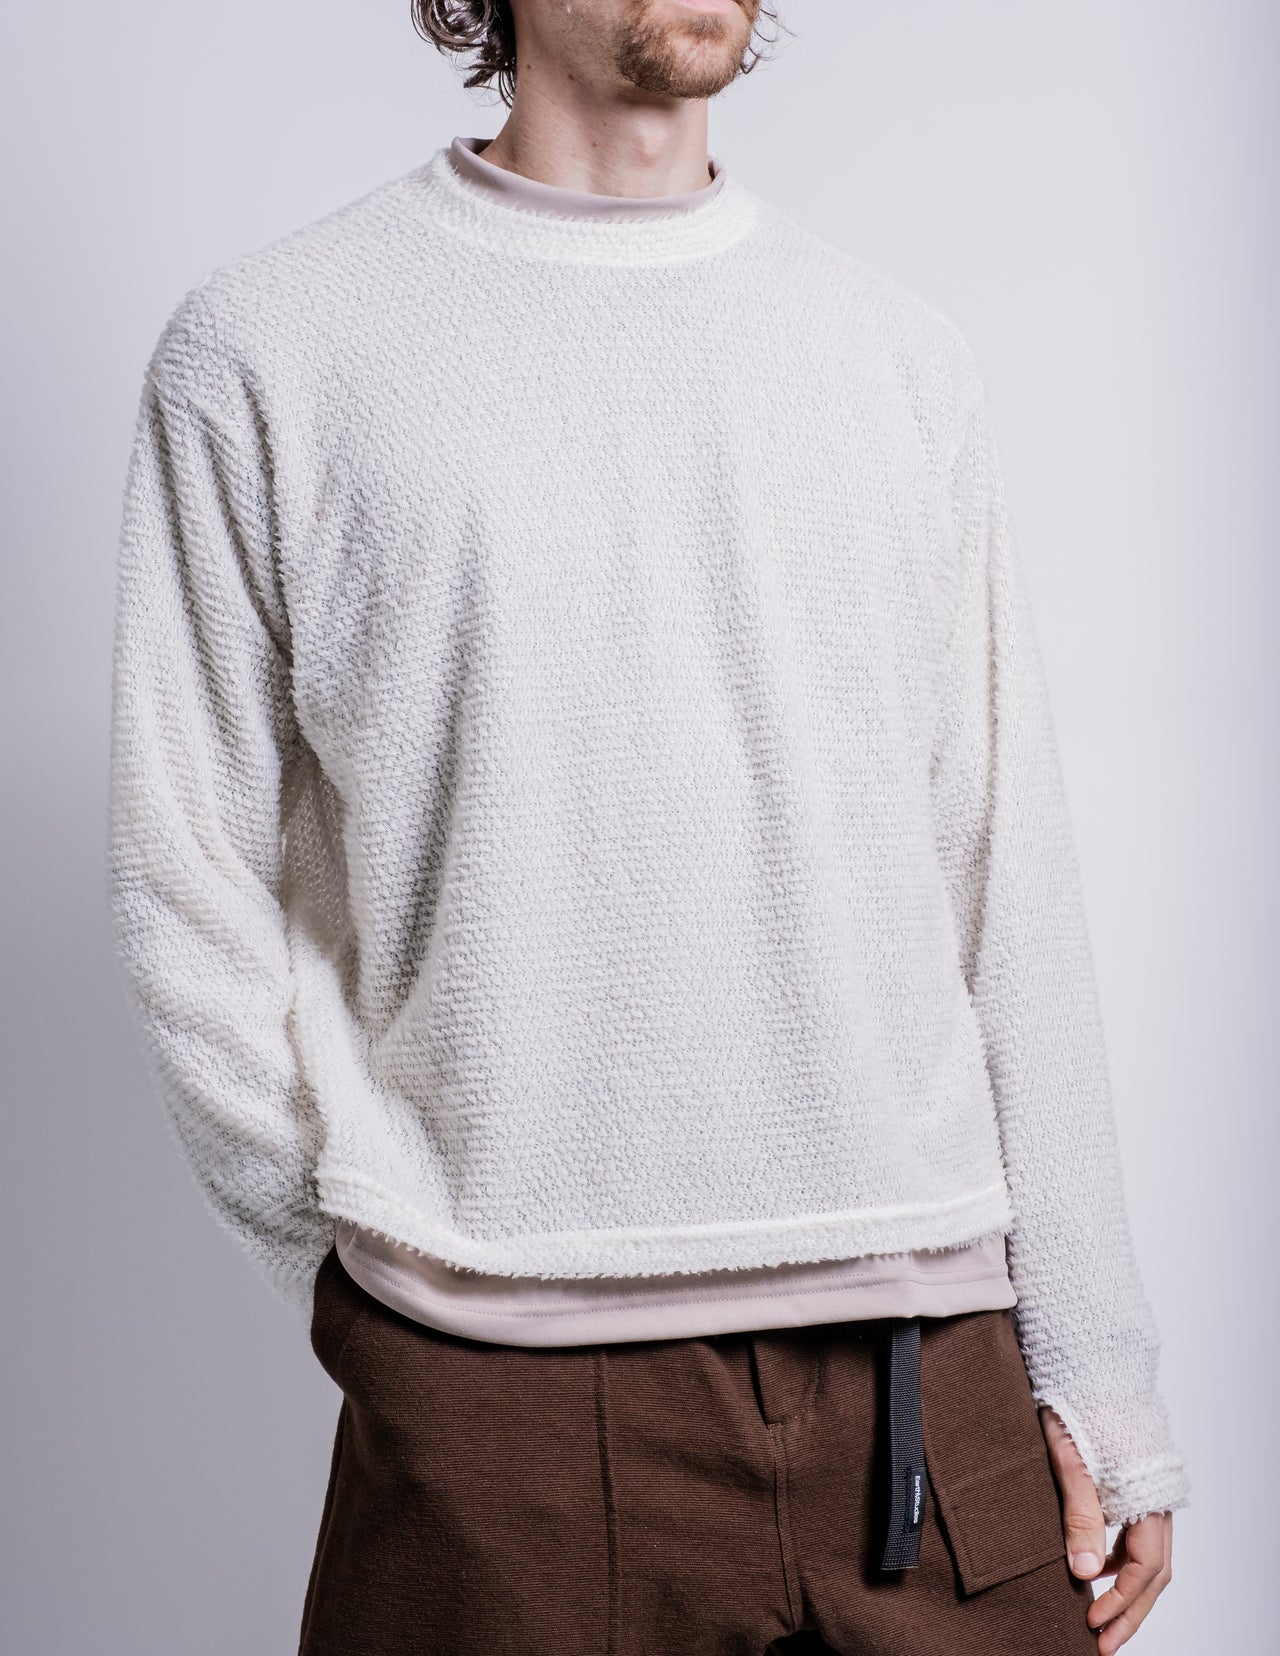 Shag Sweater in White